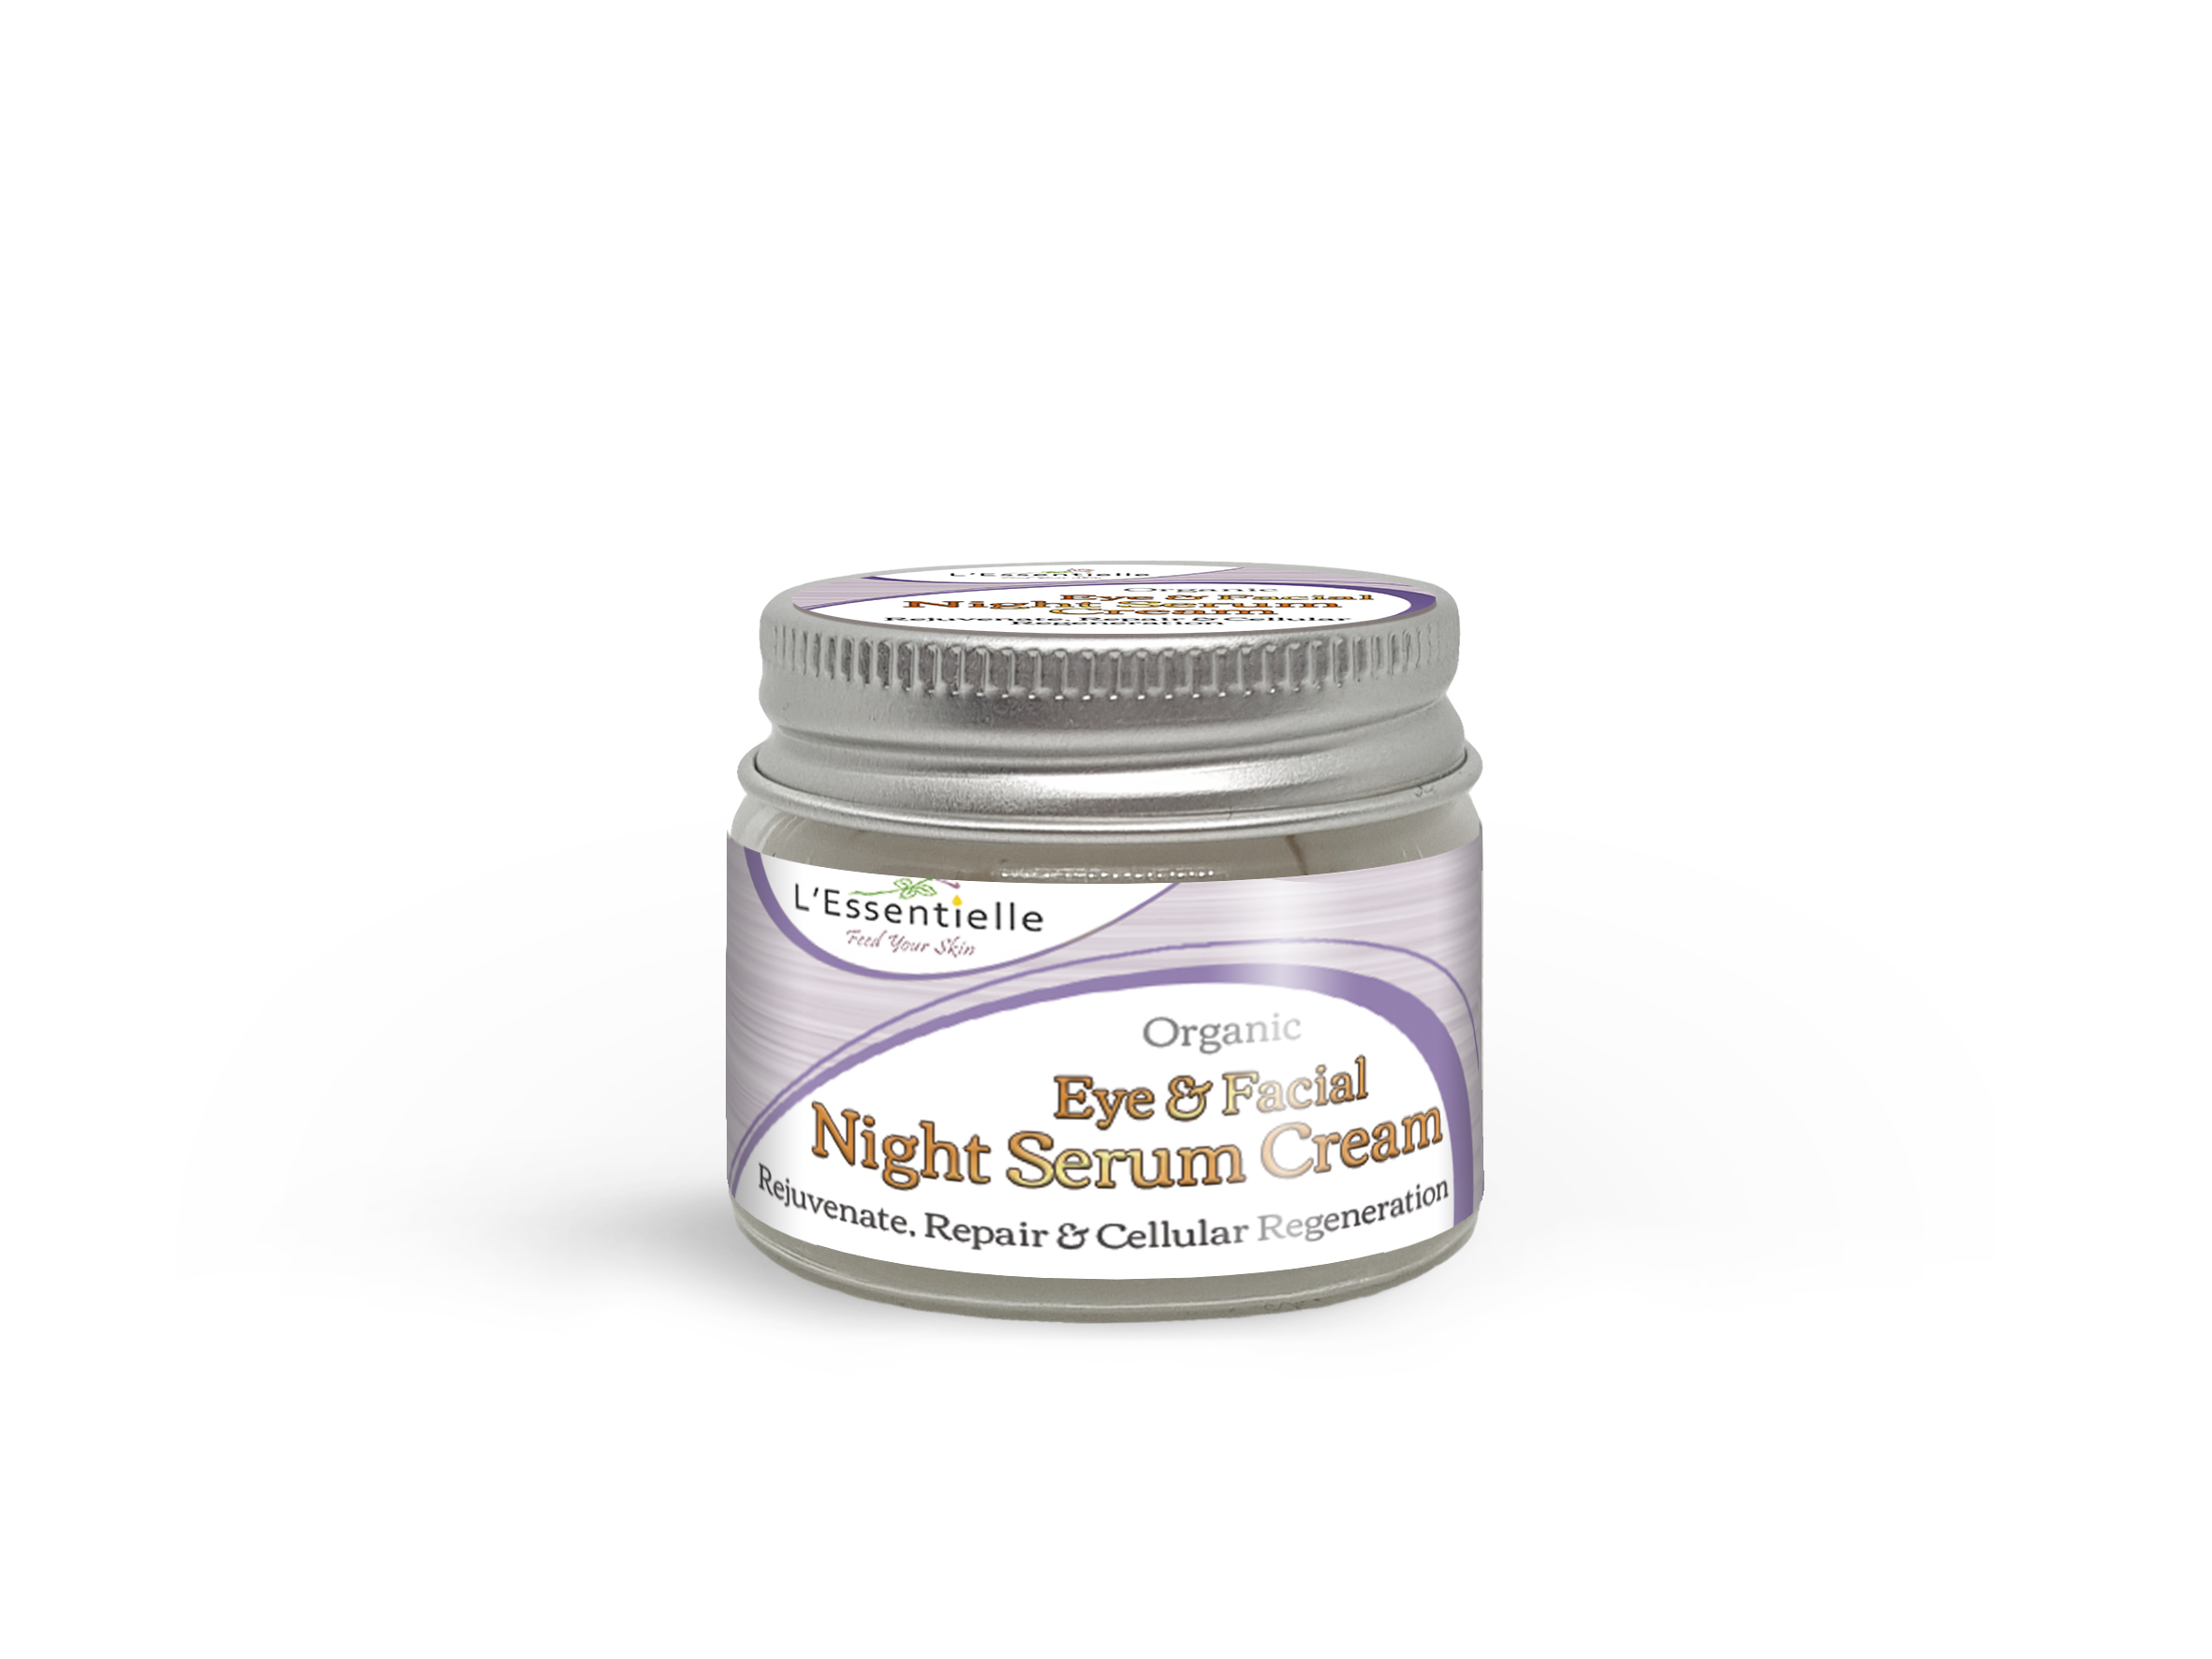 Organic Eye & Facial Night Serum Cream